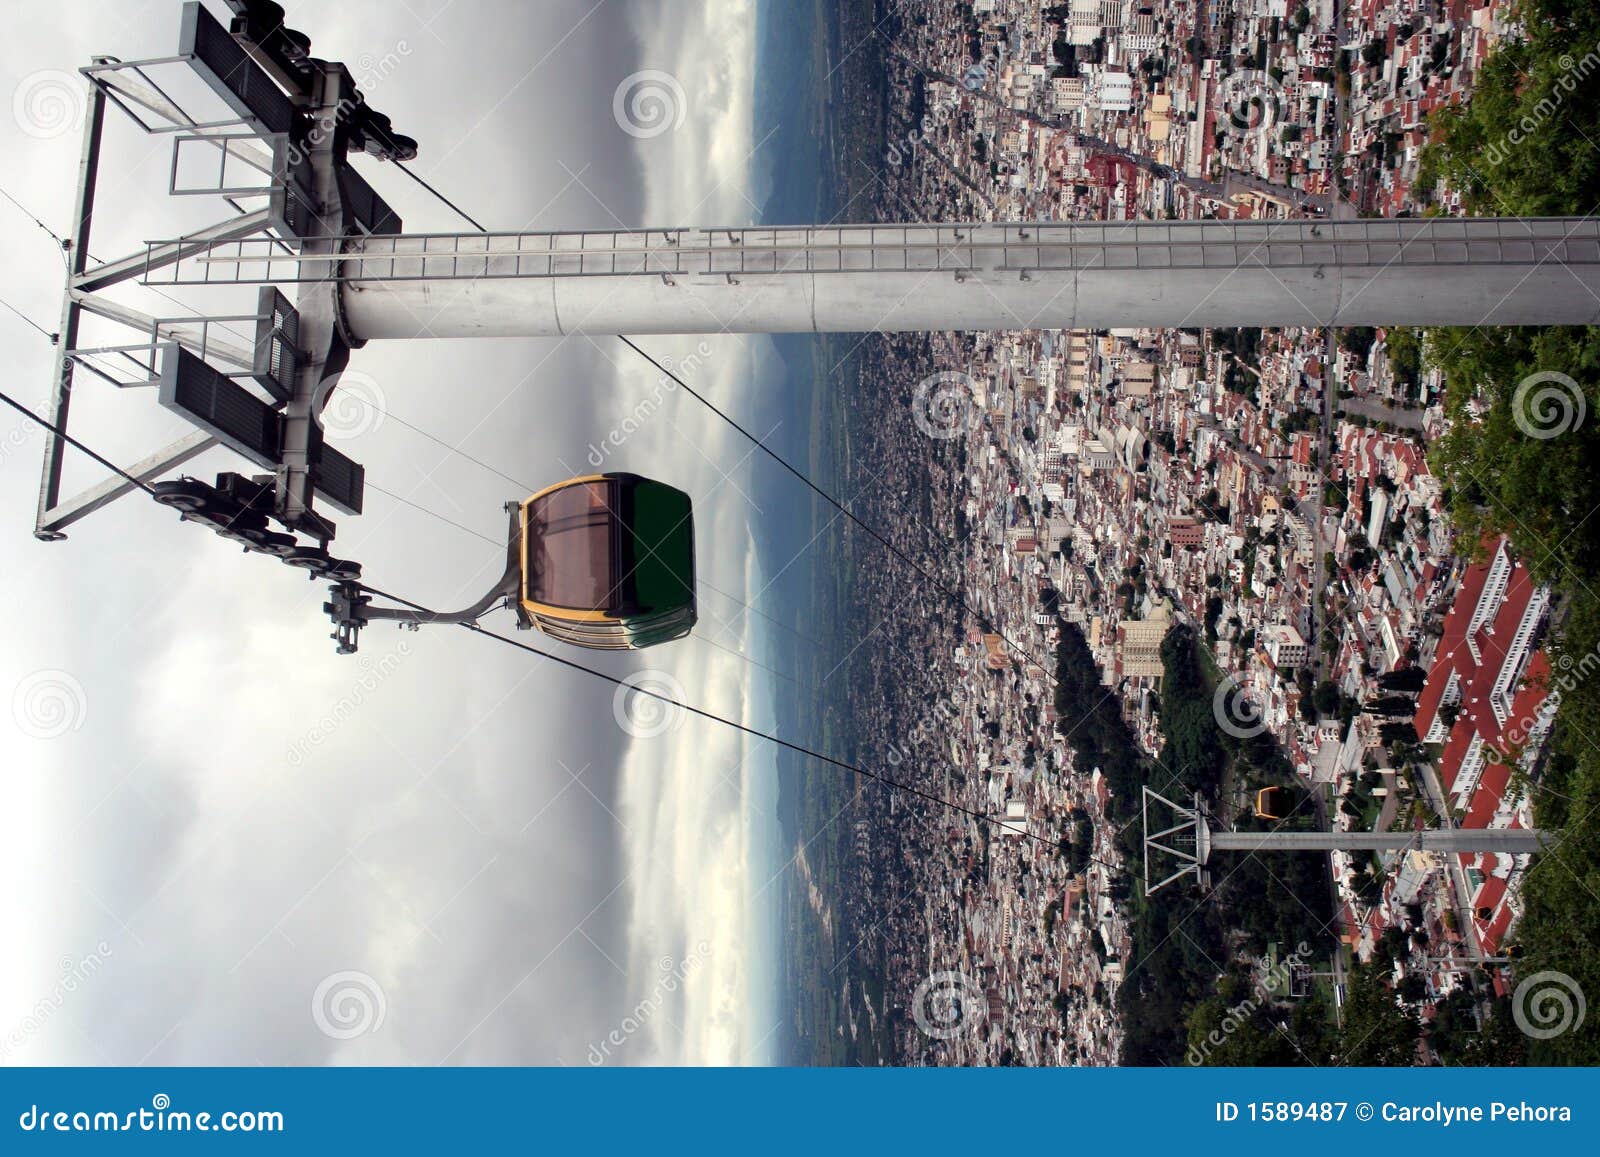 cable car, salta, argentina